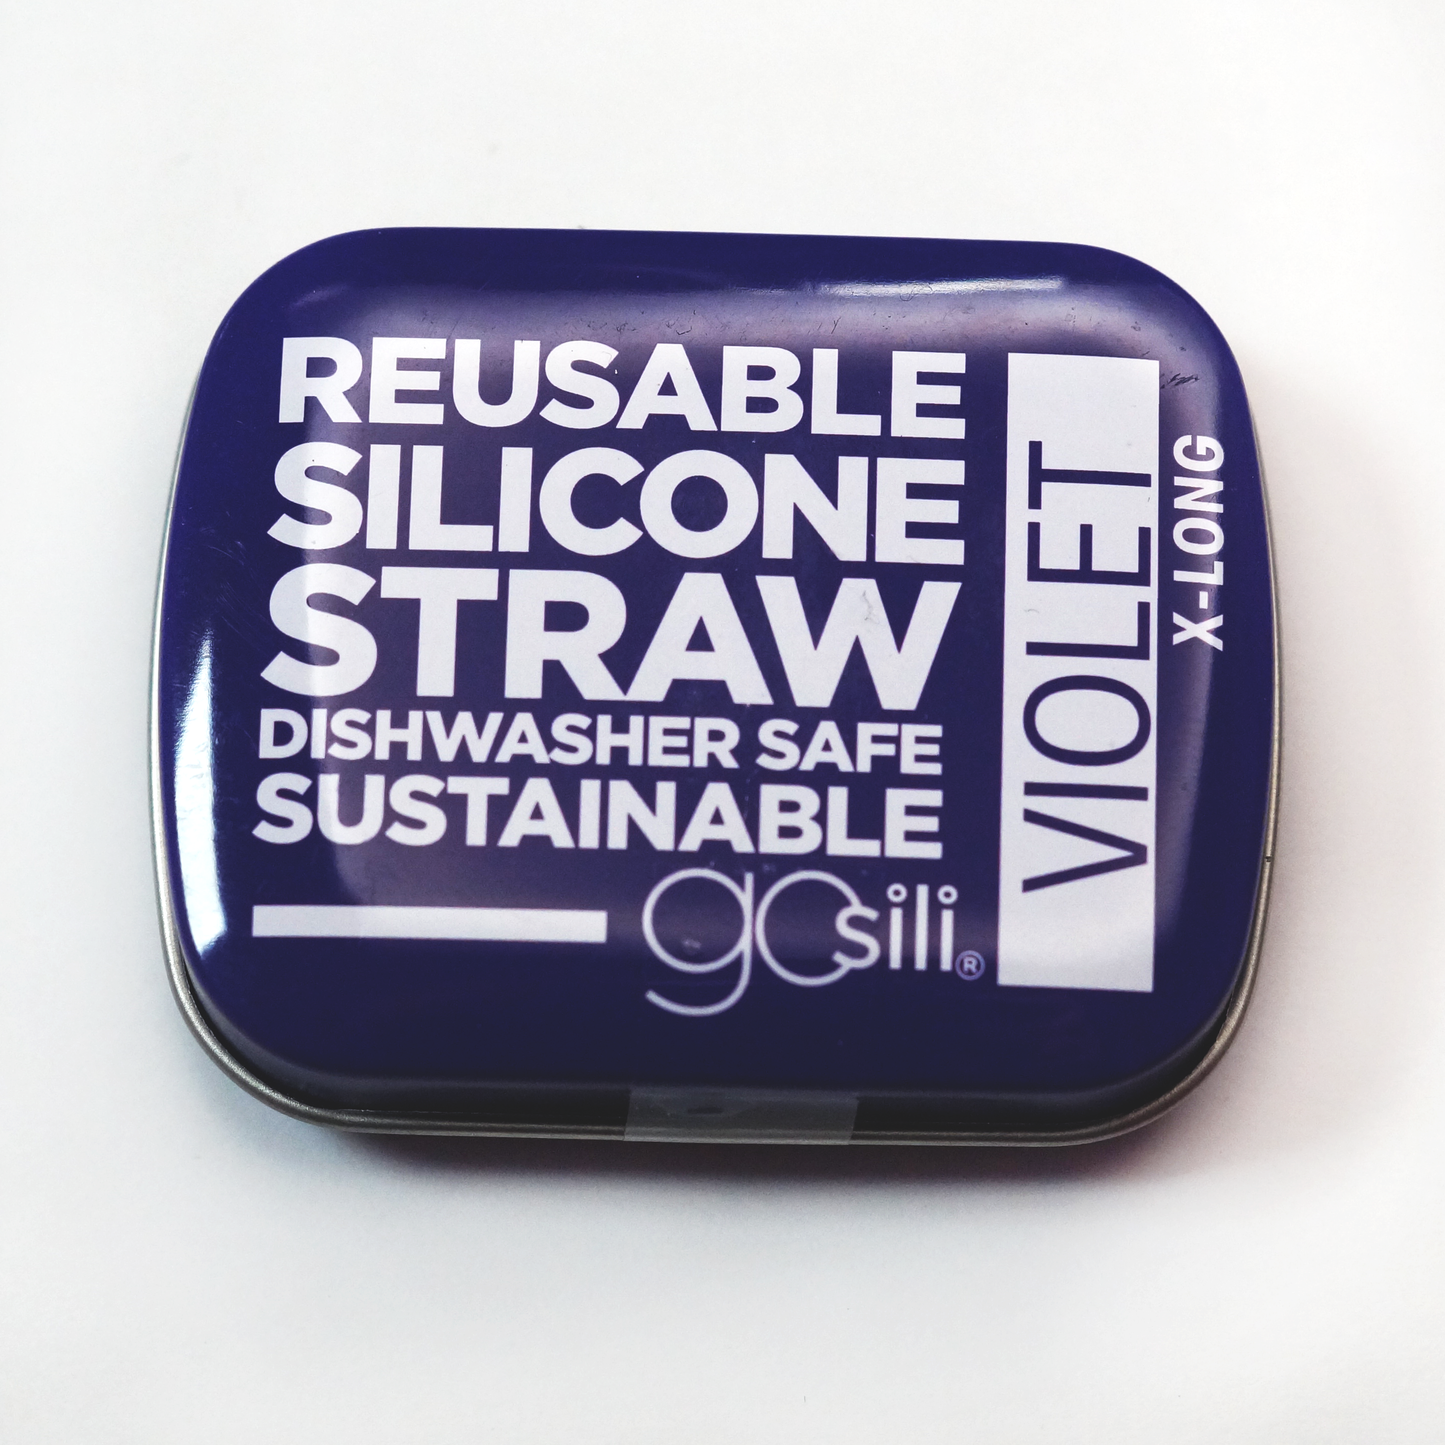 GOsili Silicone Straw